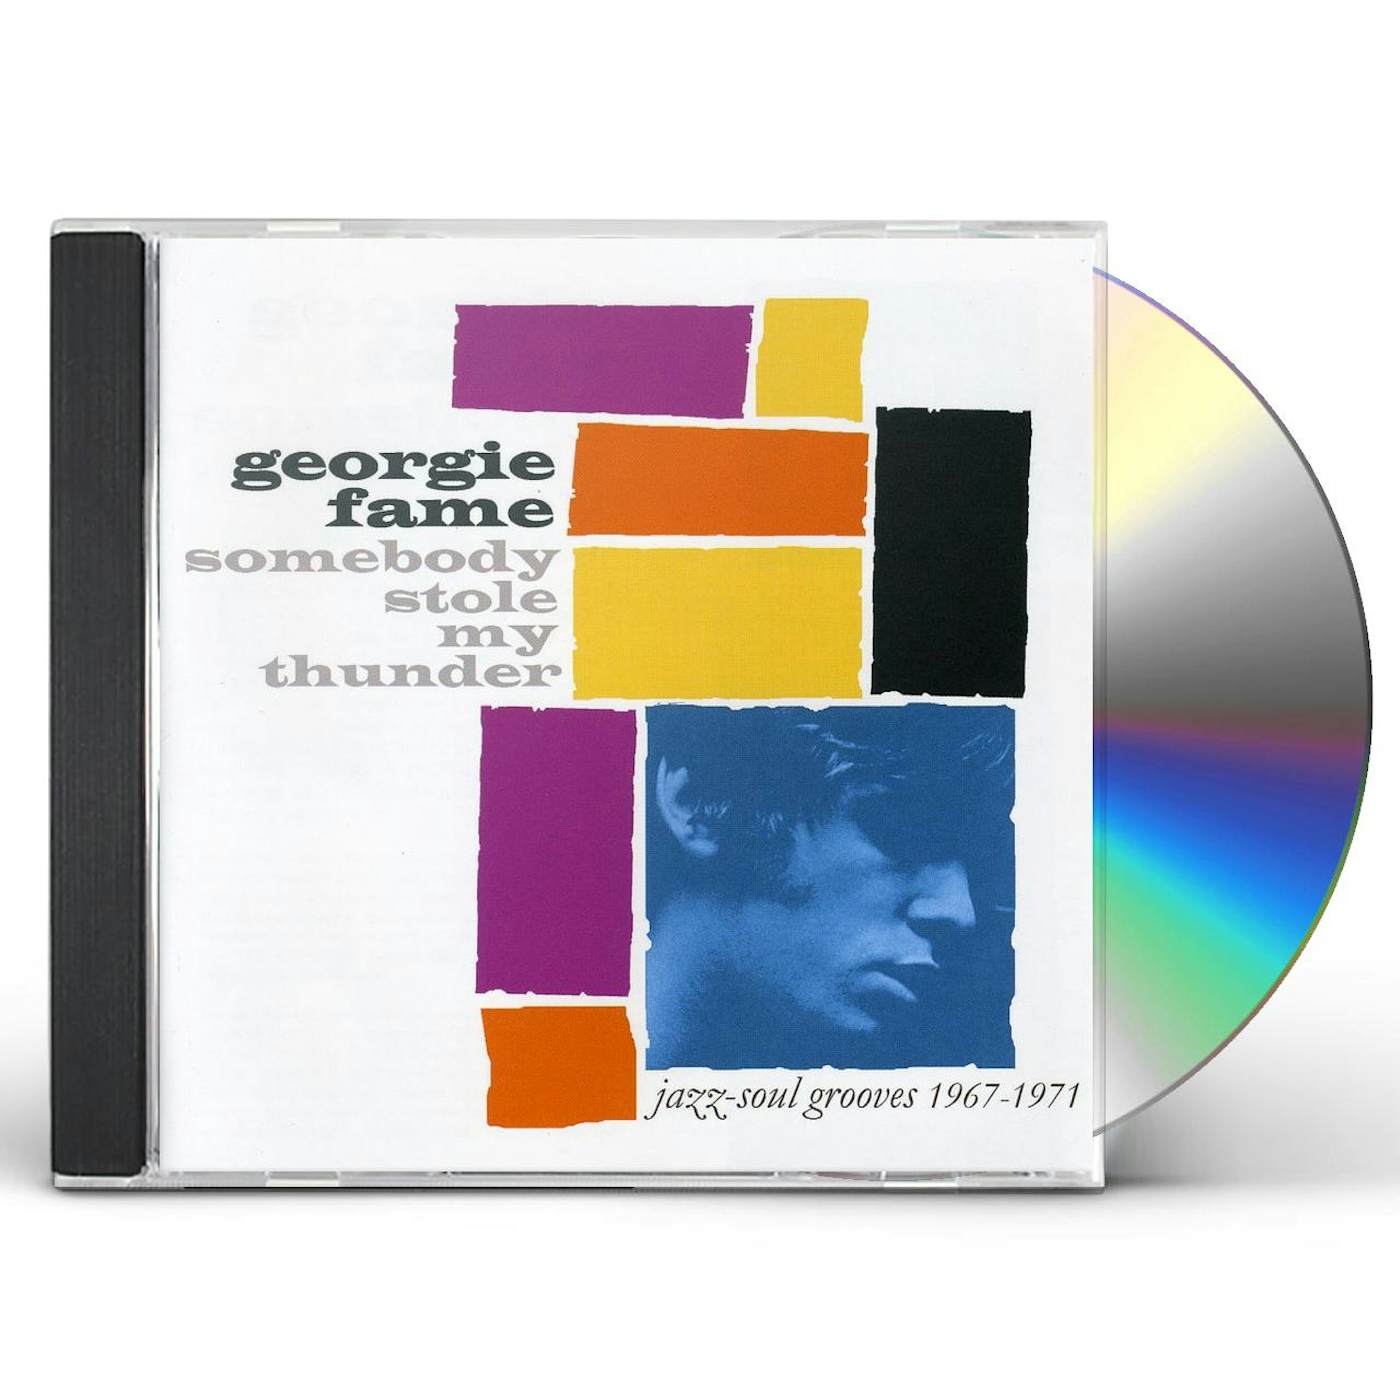 Georgie Fame SOMEBODY STOLE MY THUNDER: JAZZ-SOUL GROOVES CD